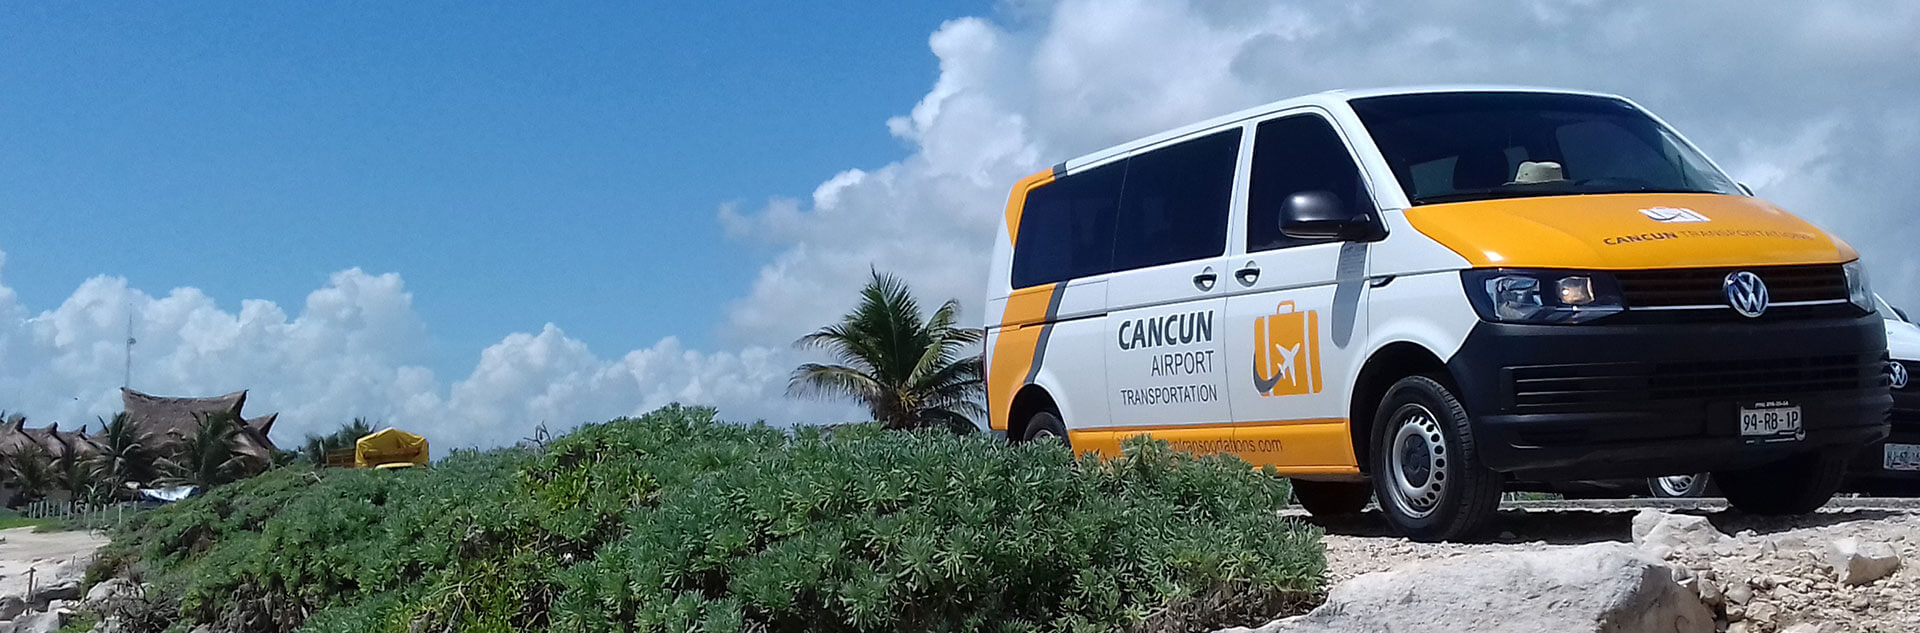 Cancun to Tulum Transportation | Cancun Airport to Tulum